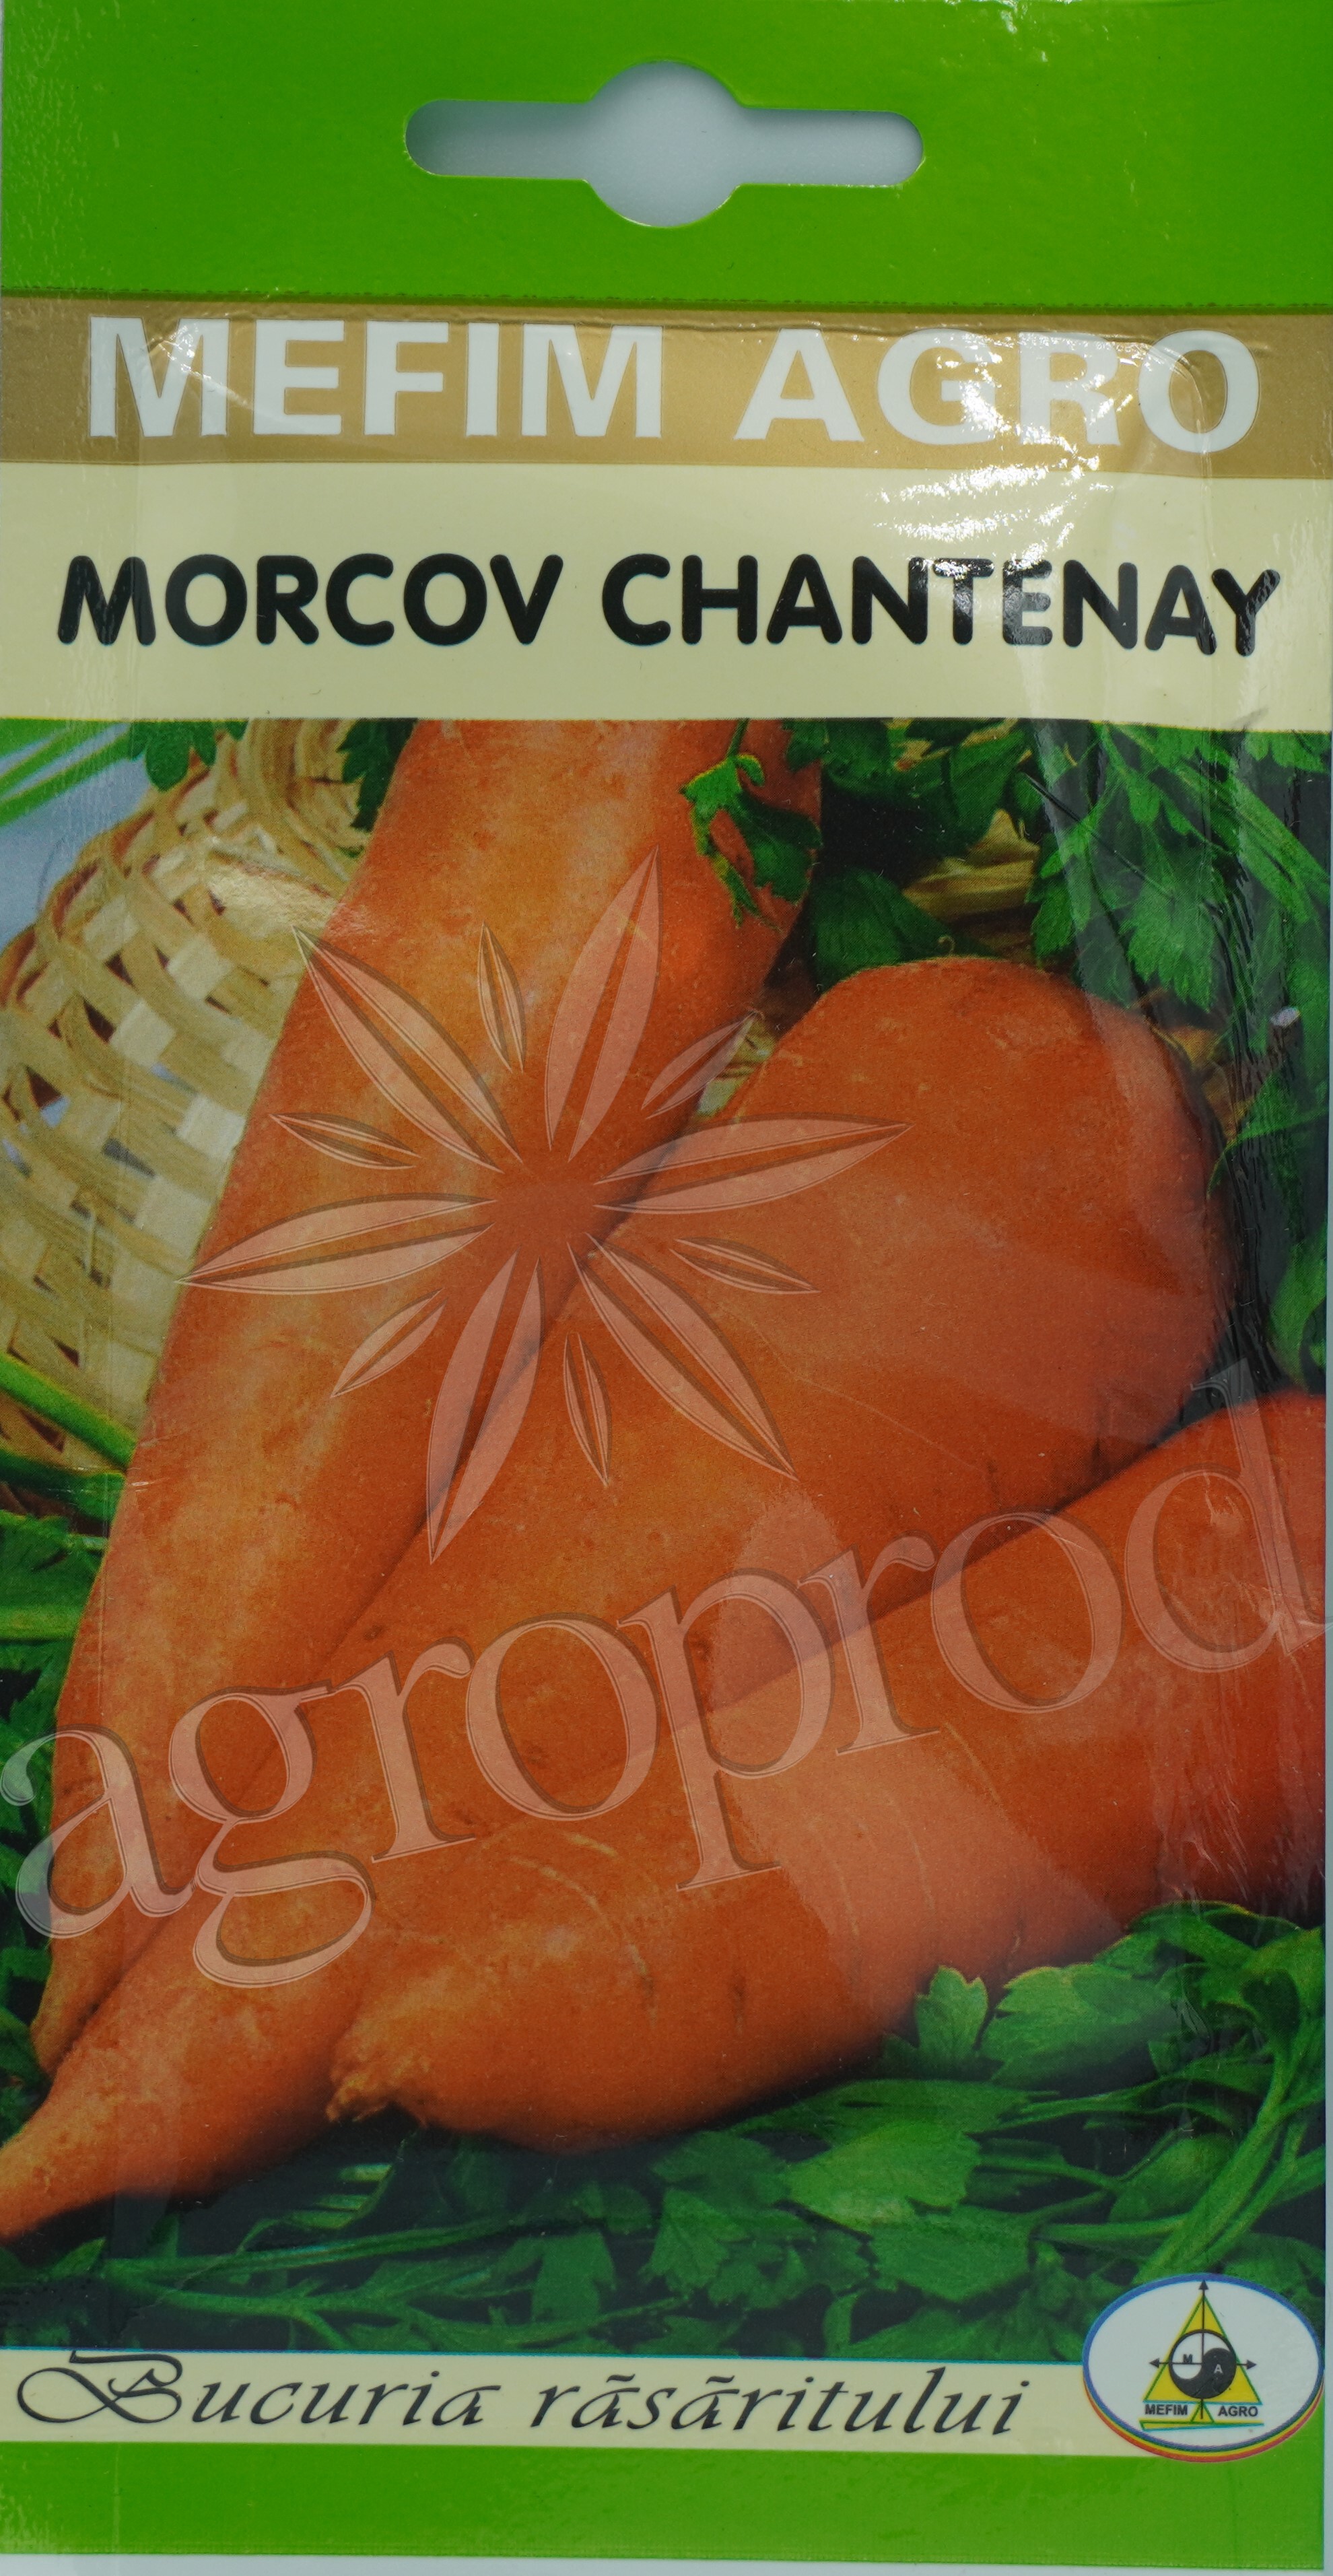 Seminte morcov Chantenay 5g